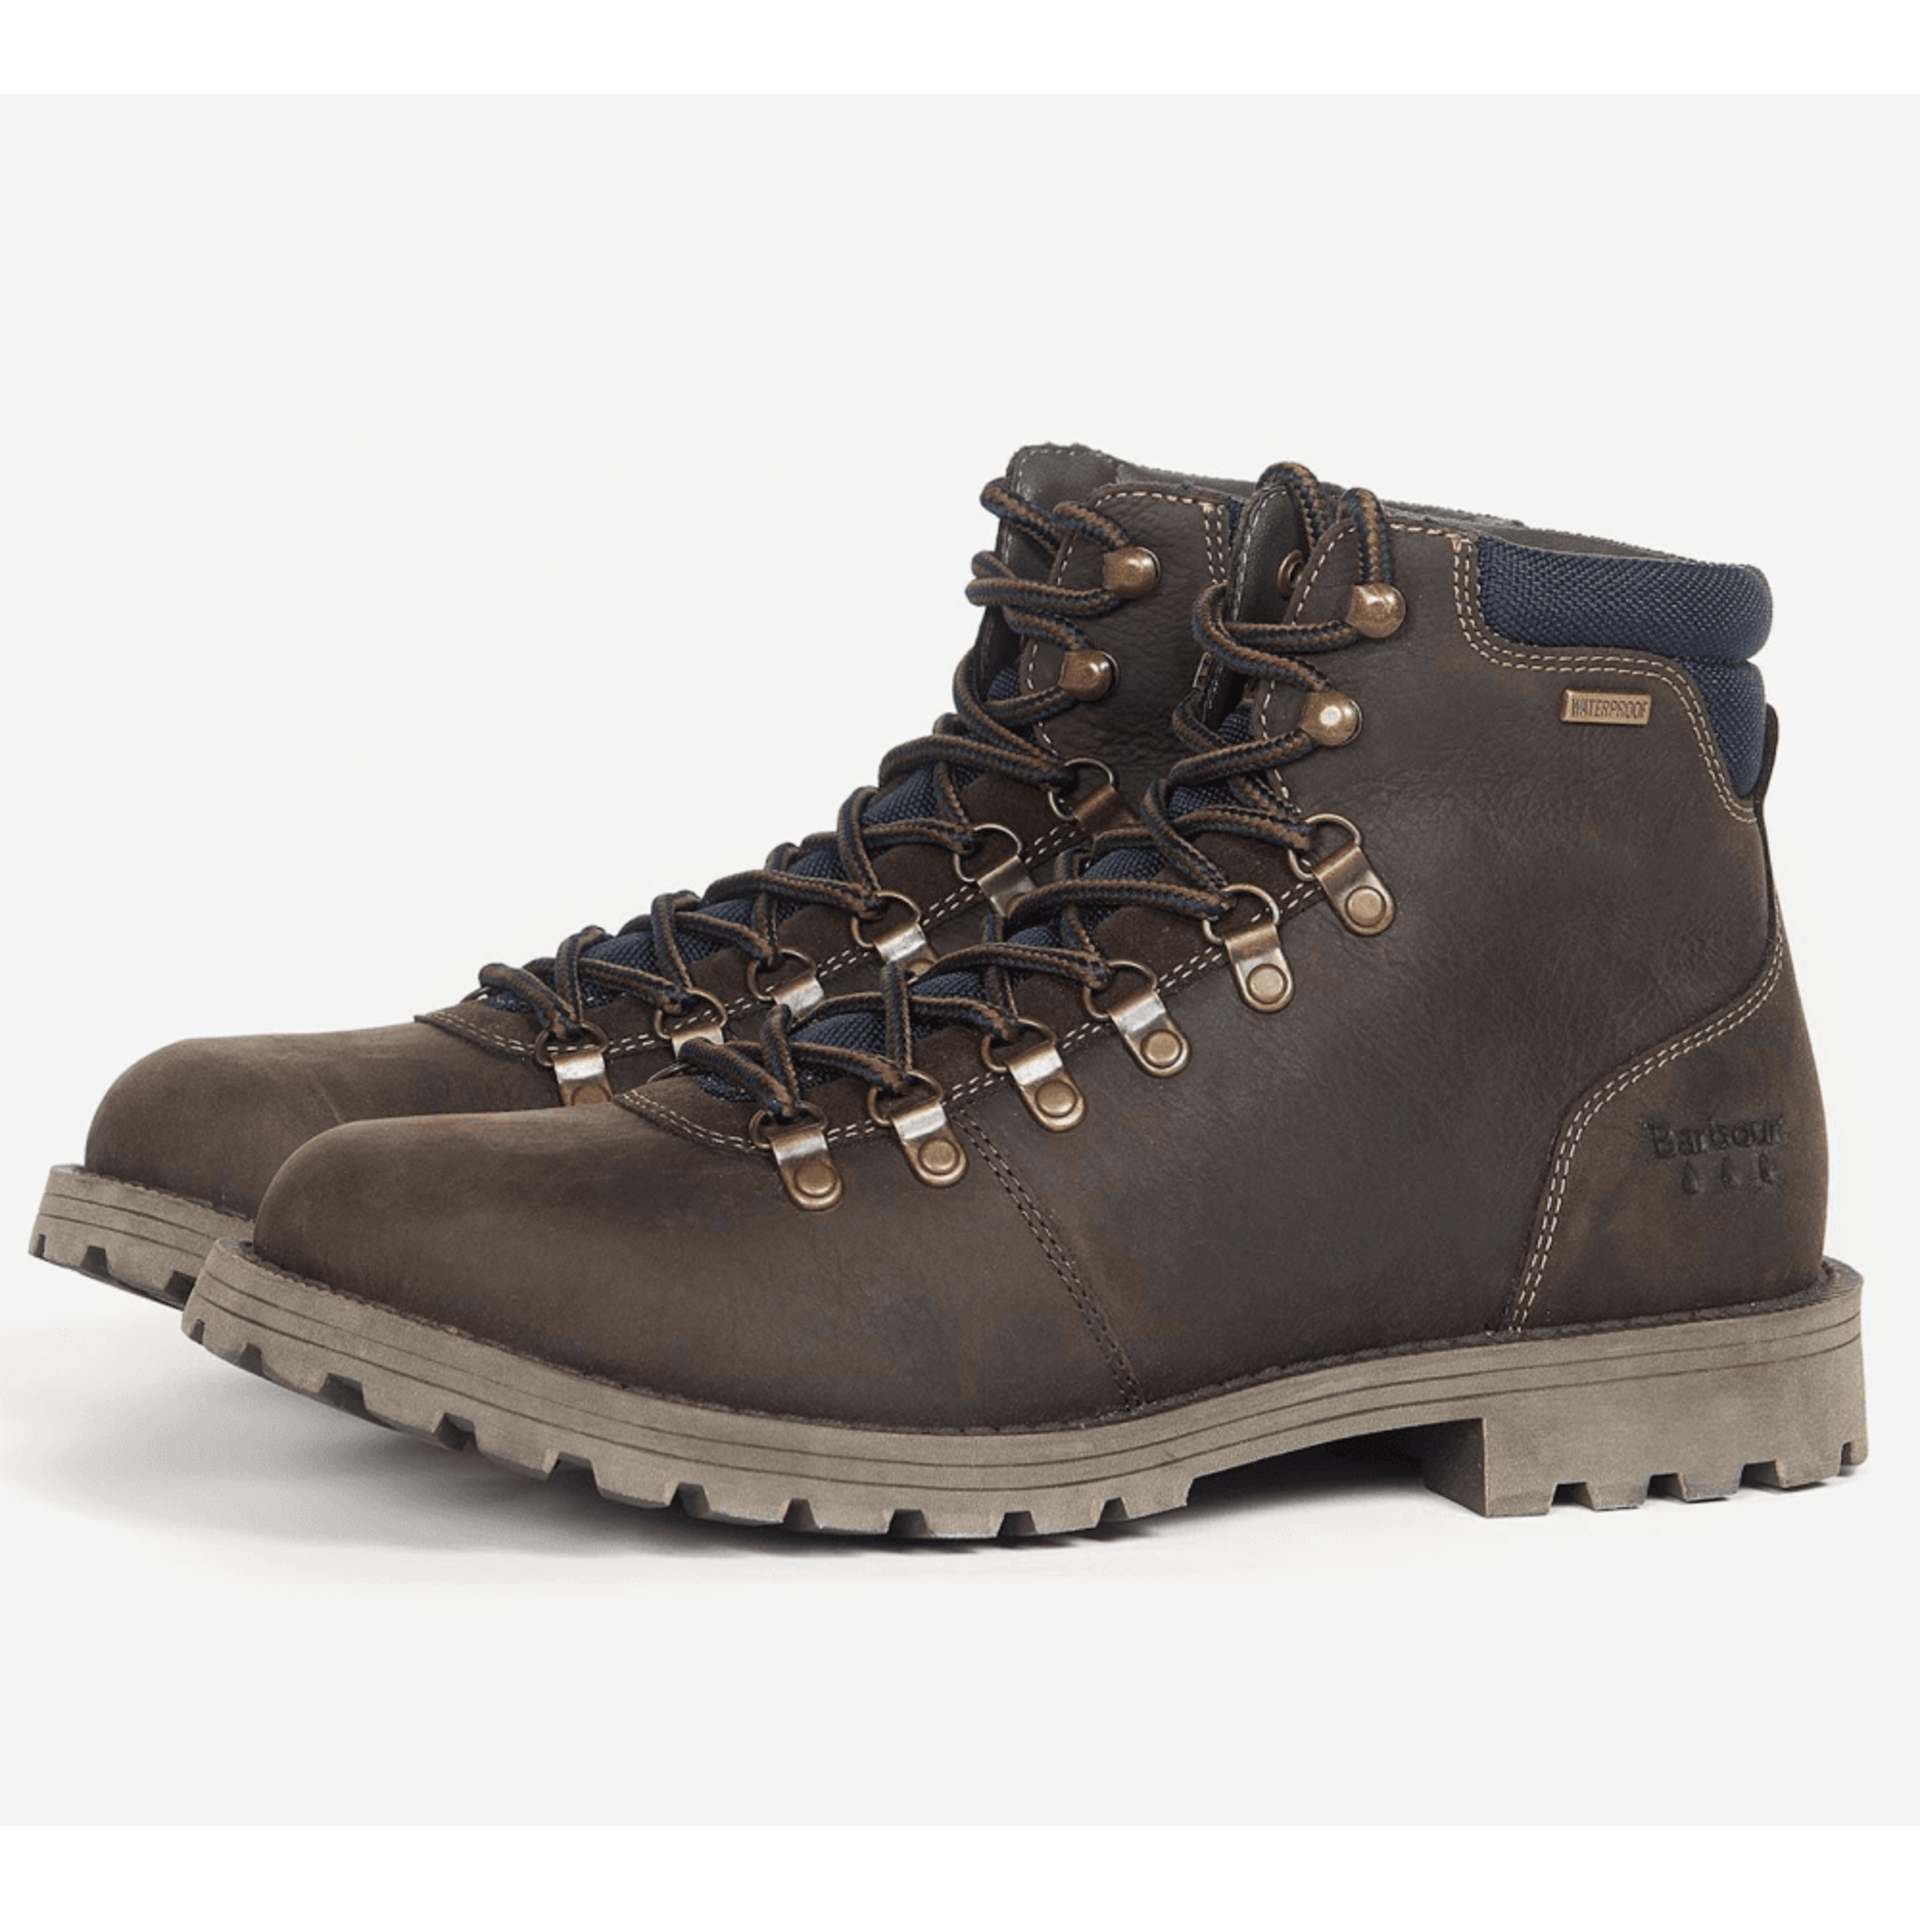 New Size 10 Barbour Oak Quantock Hiker Boots - RRP £159.